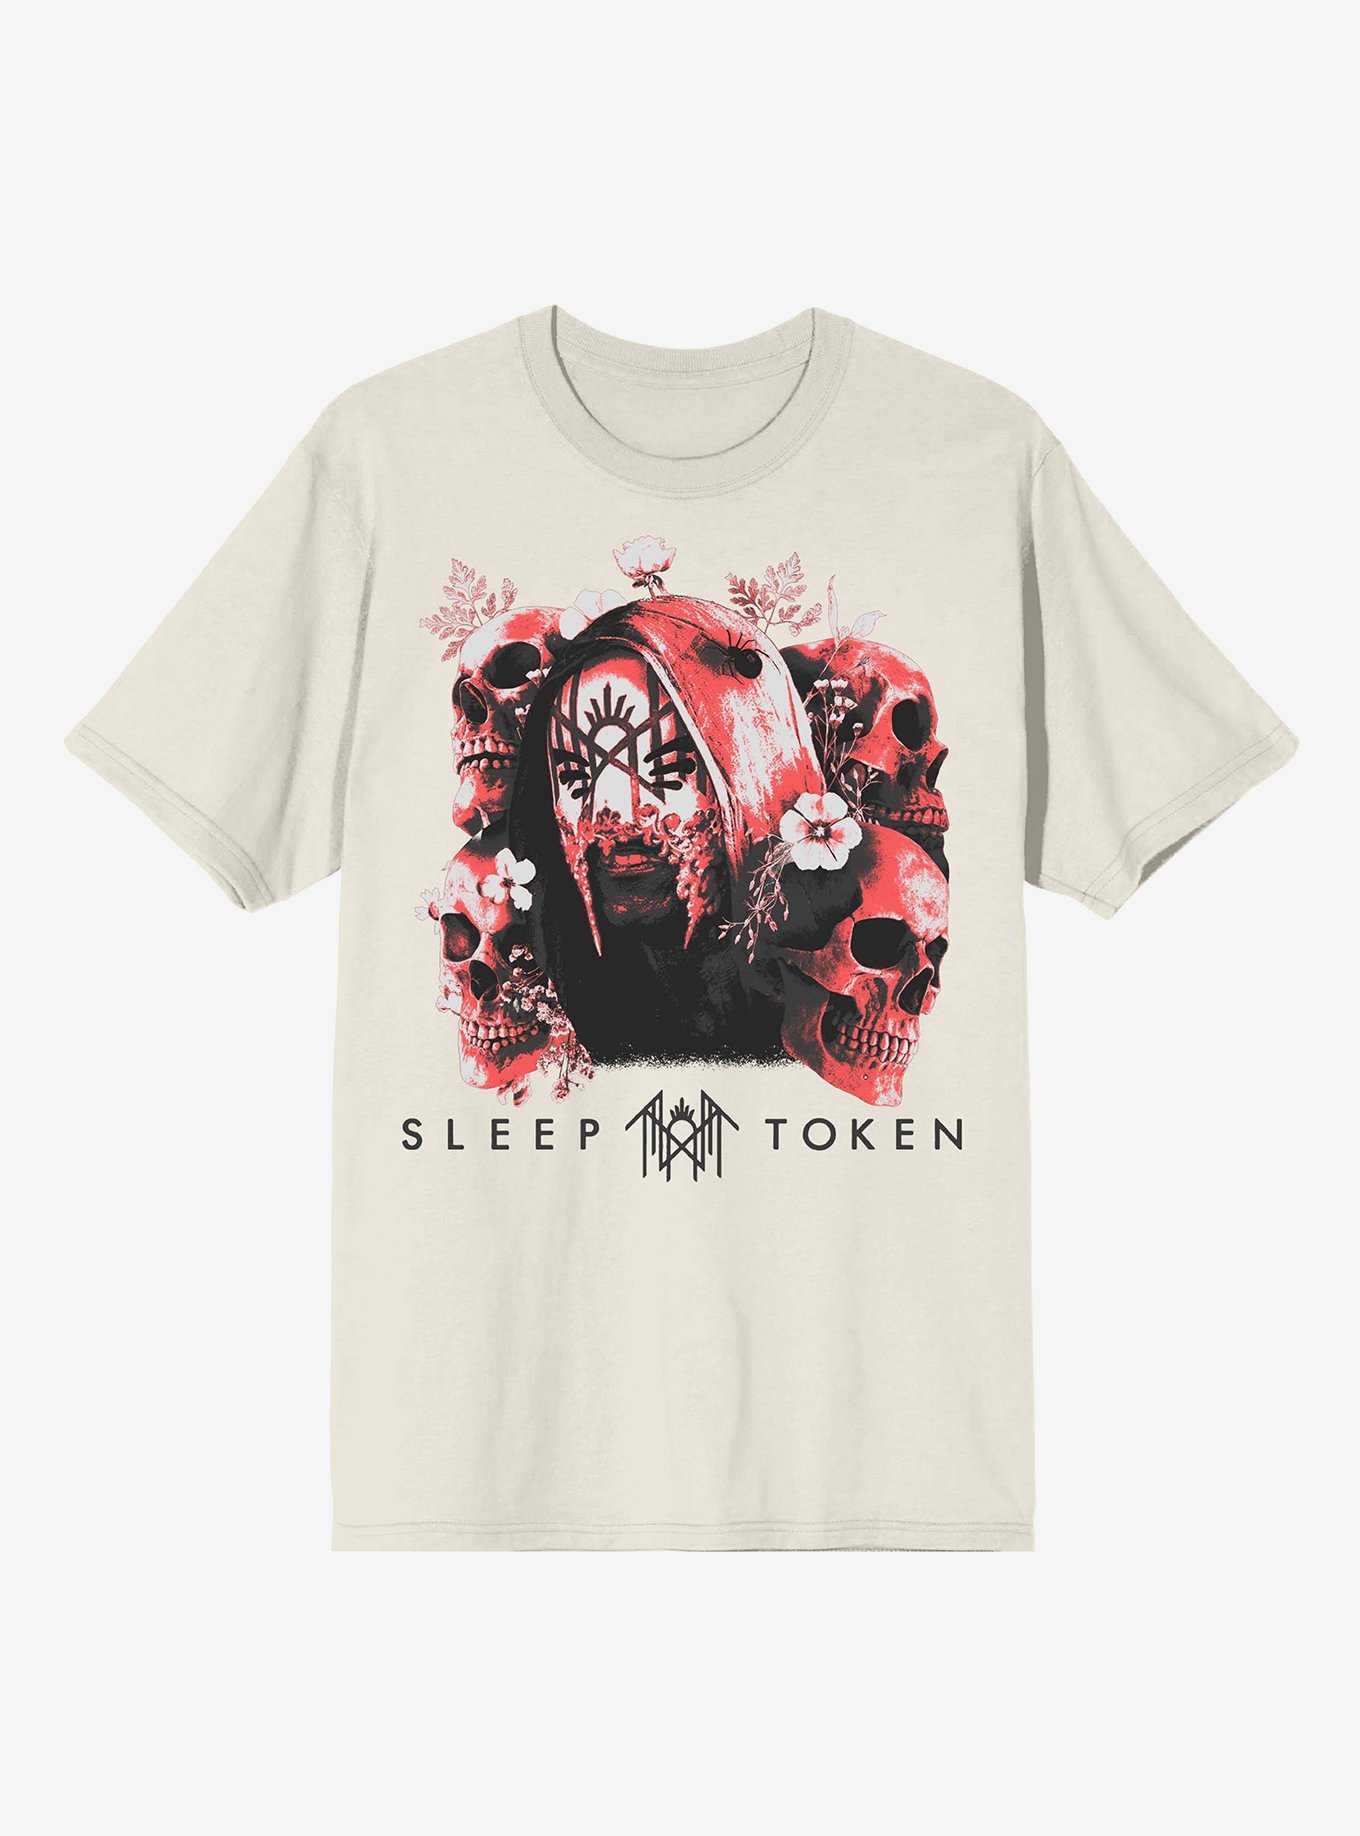 Sleep Token Vessel Skulls & Flowers Boyfriend Fit Girls T-Shirt, , hi-res